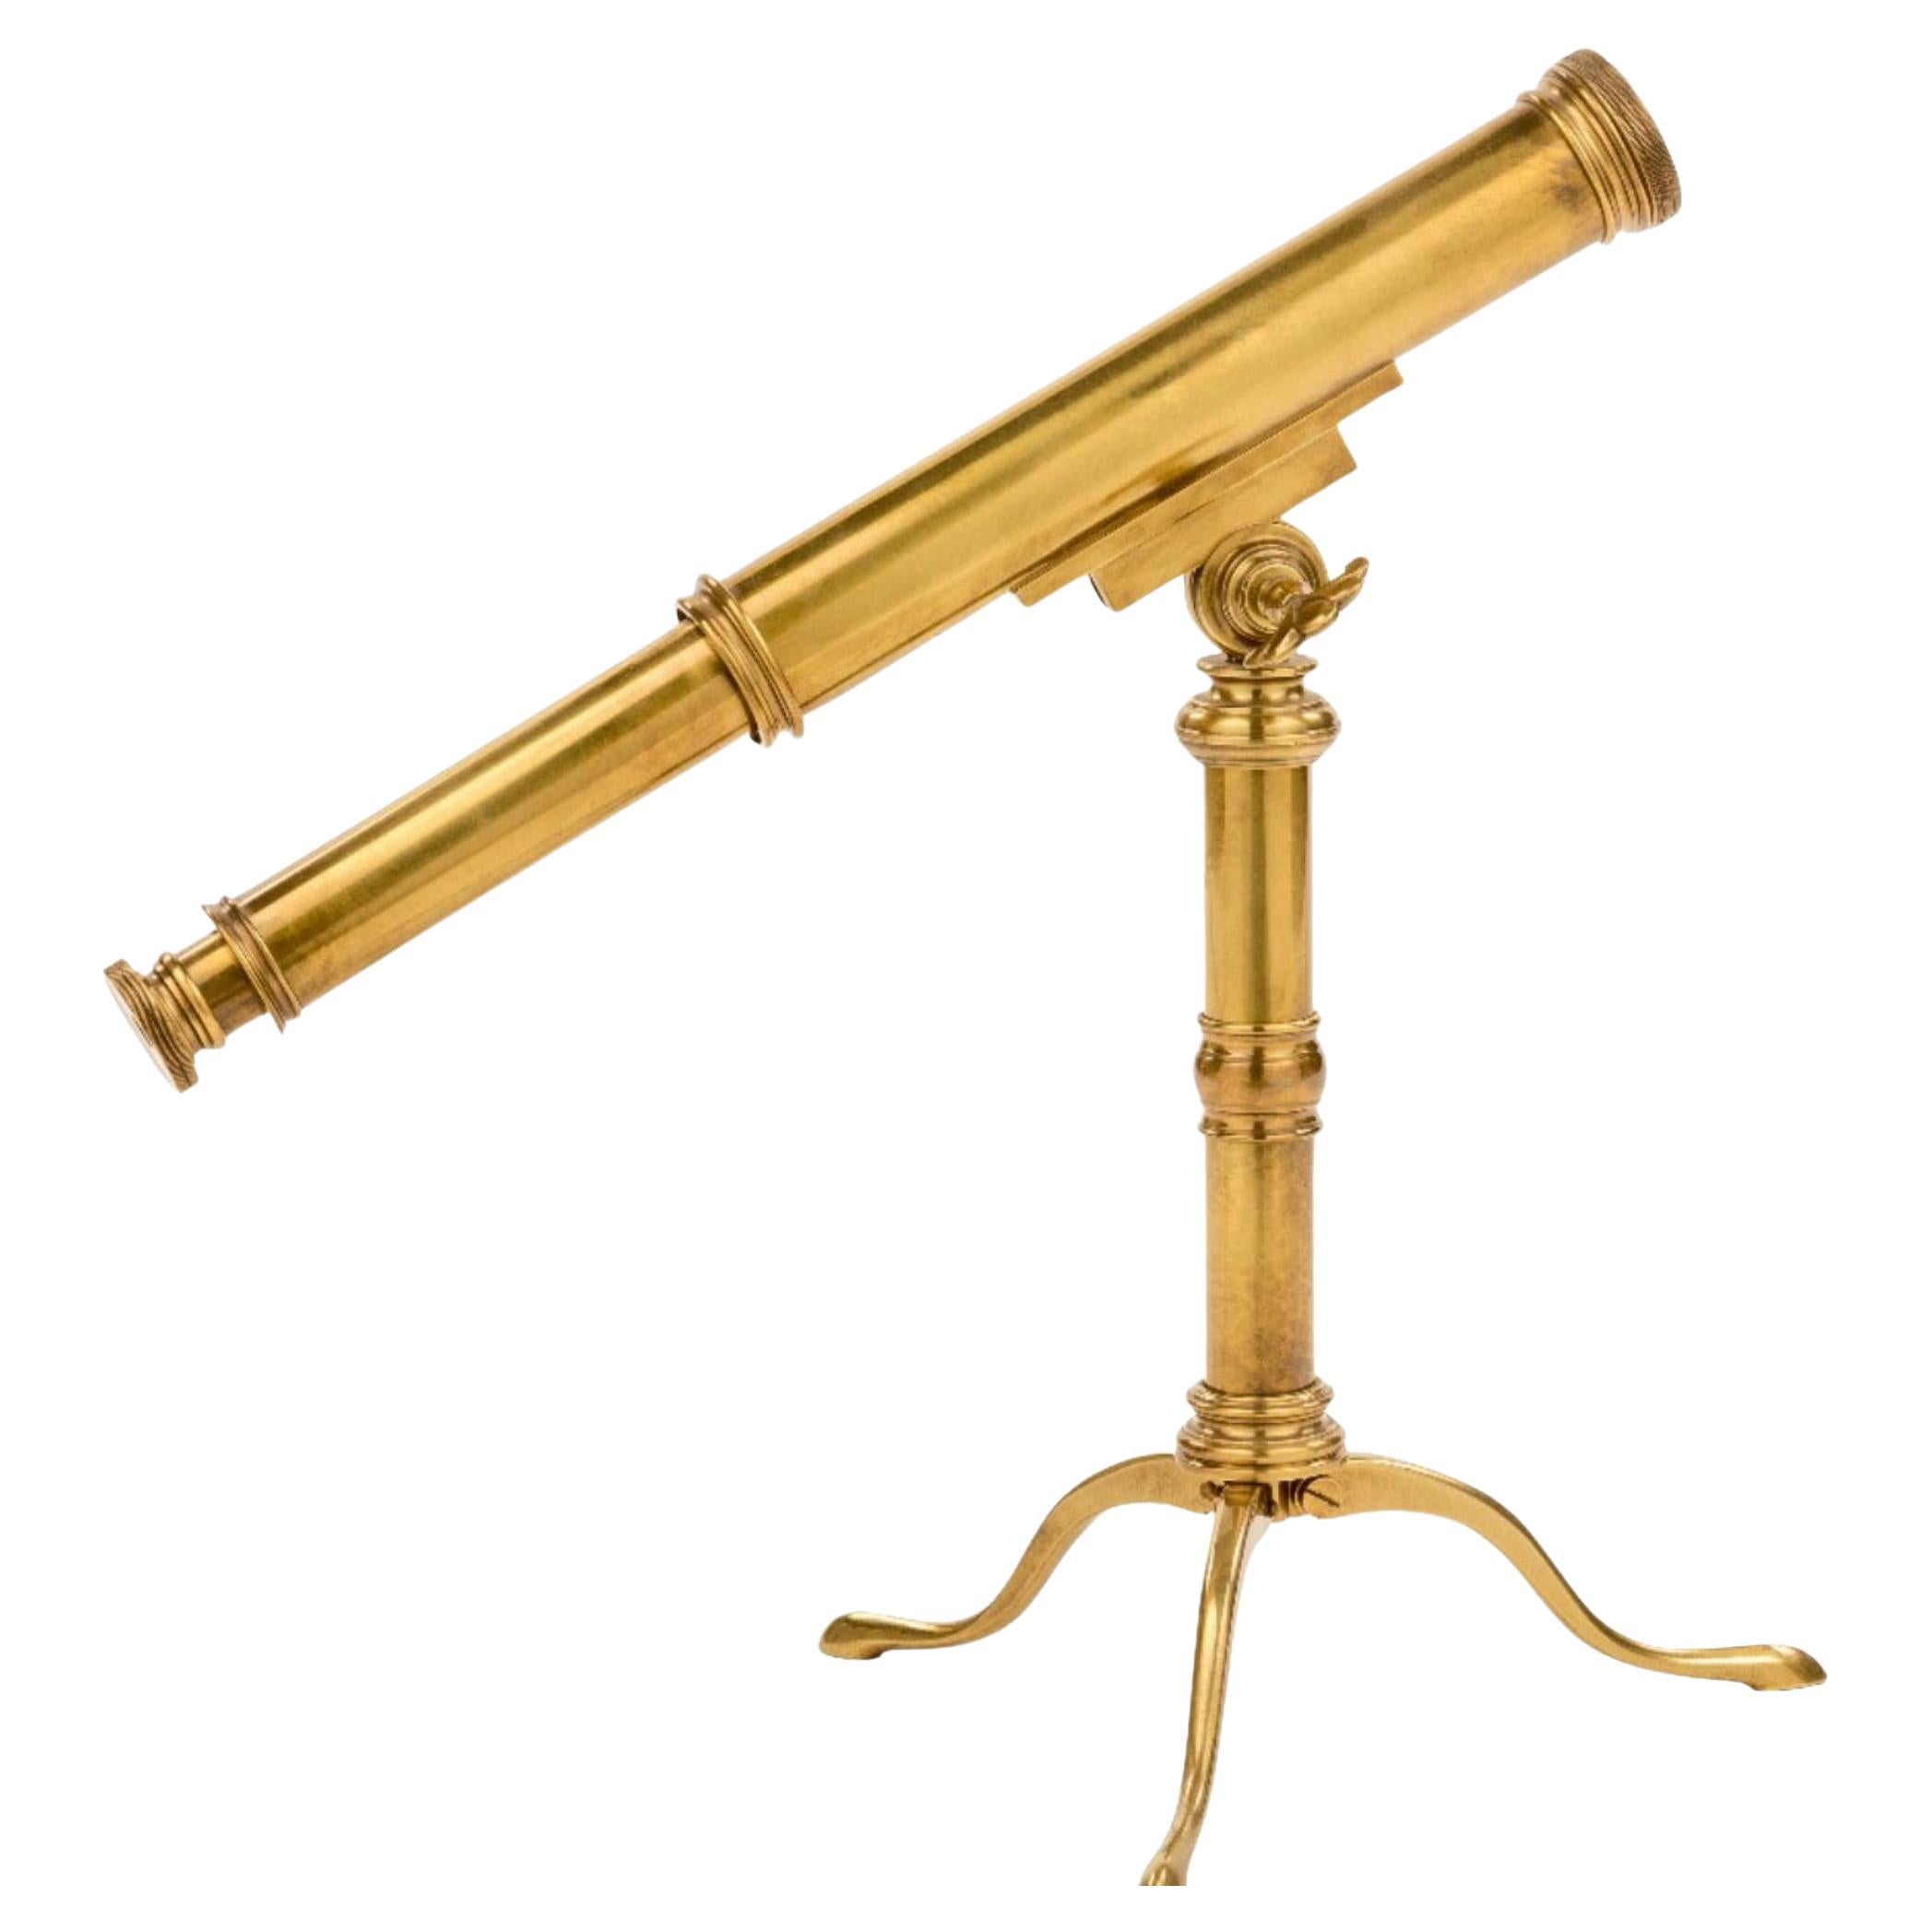 Merlino brass telescope ornament For Sale